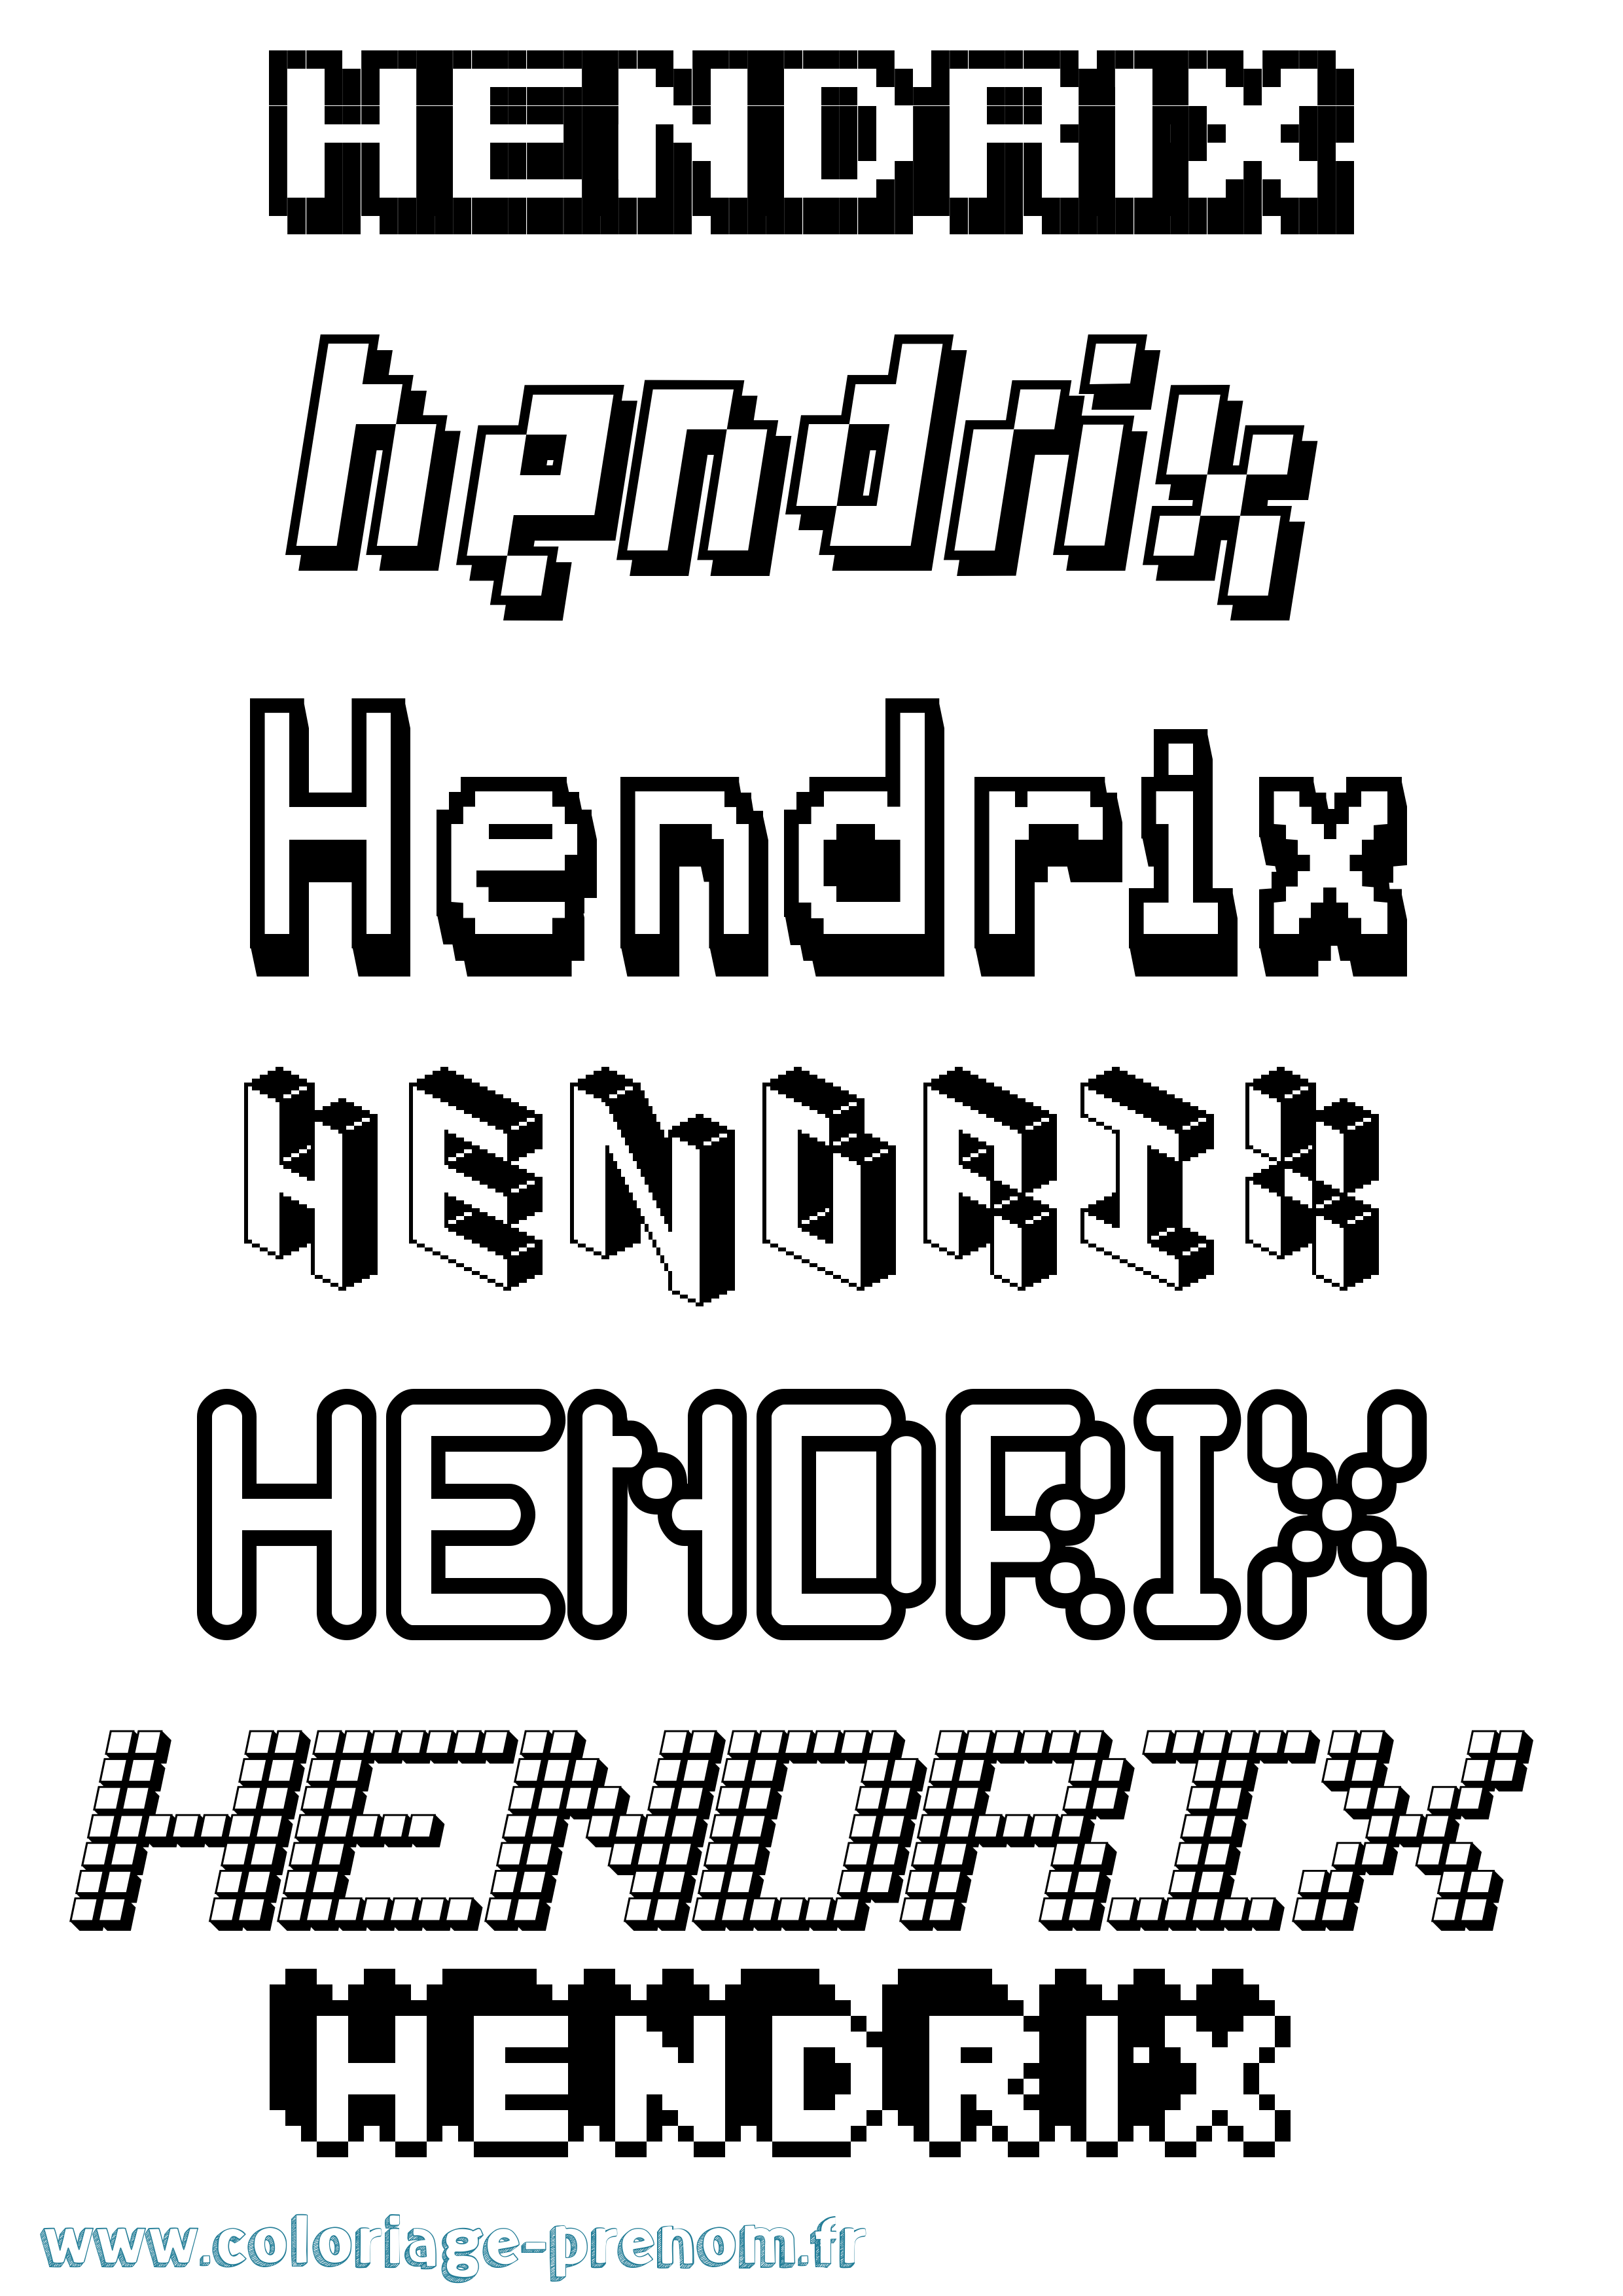 Coloriage prénom Hendrix Pixel